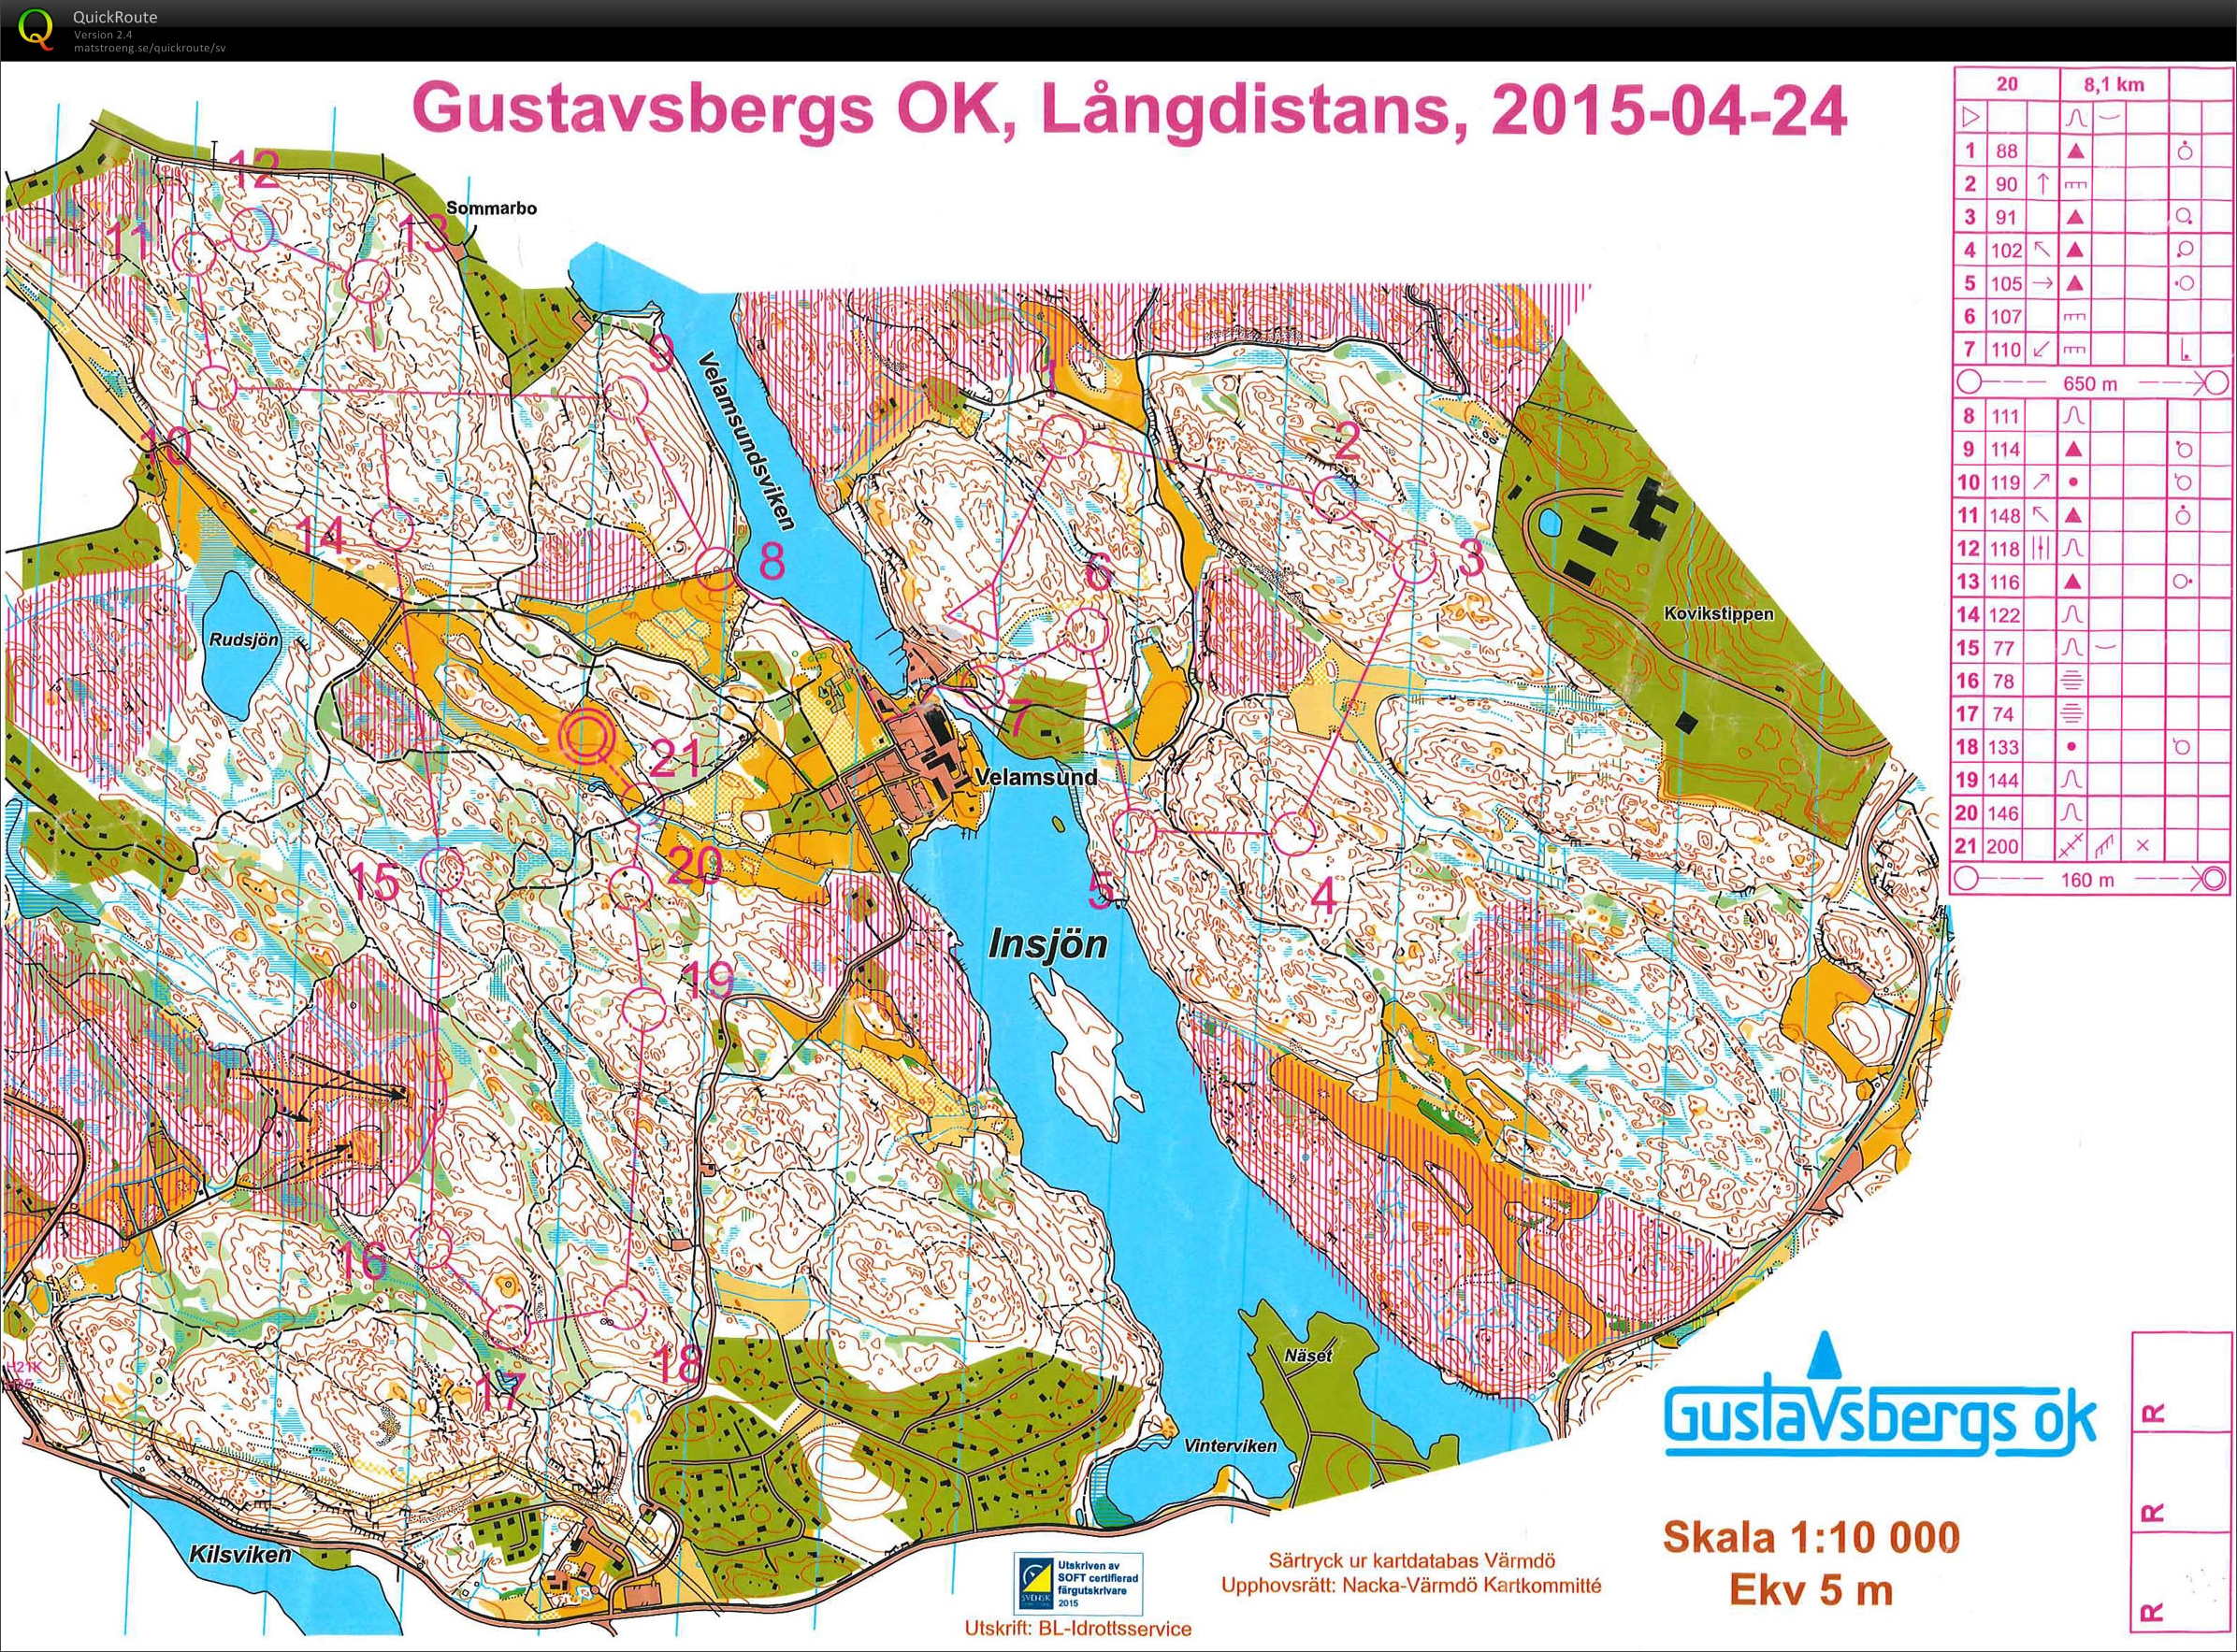 Gustavsbergs OK långdistans (25-04-2015)